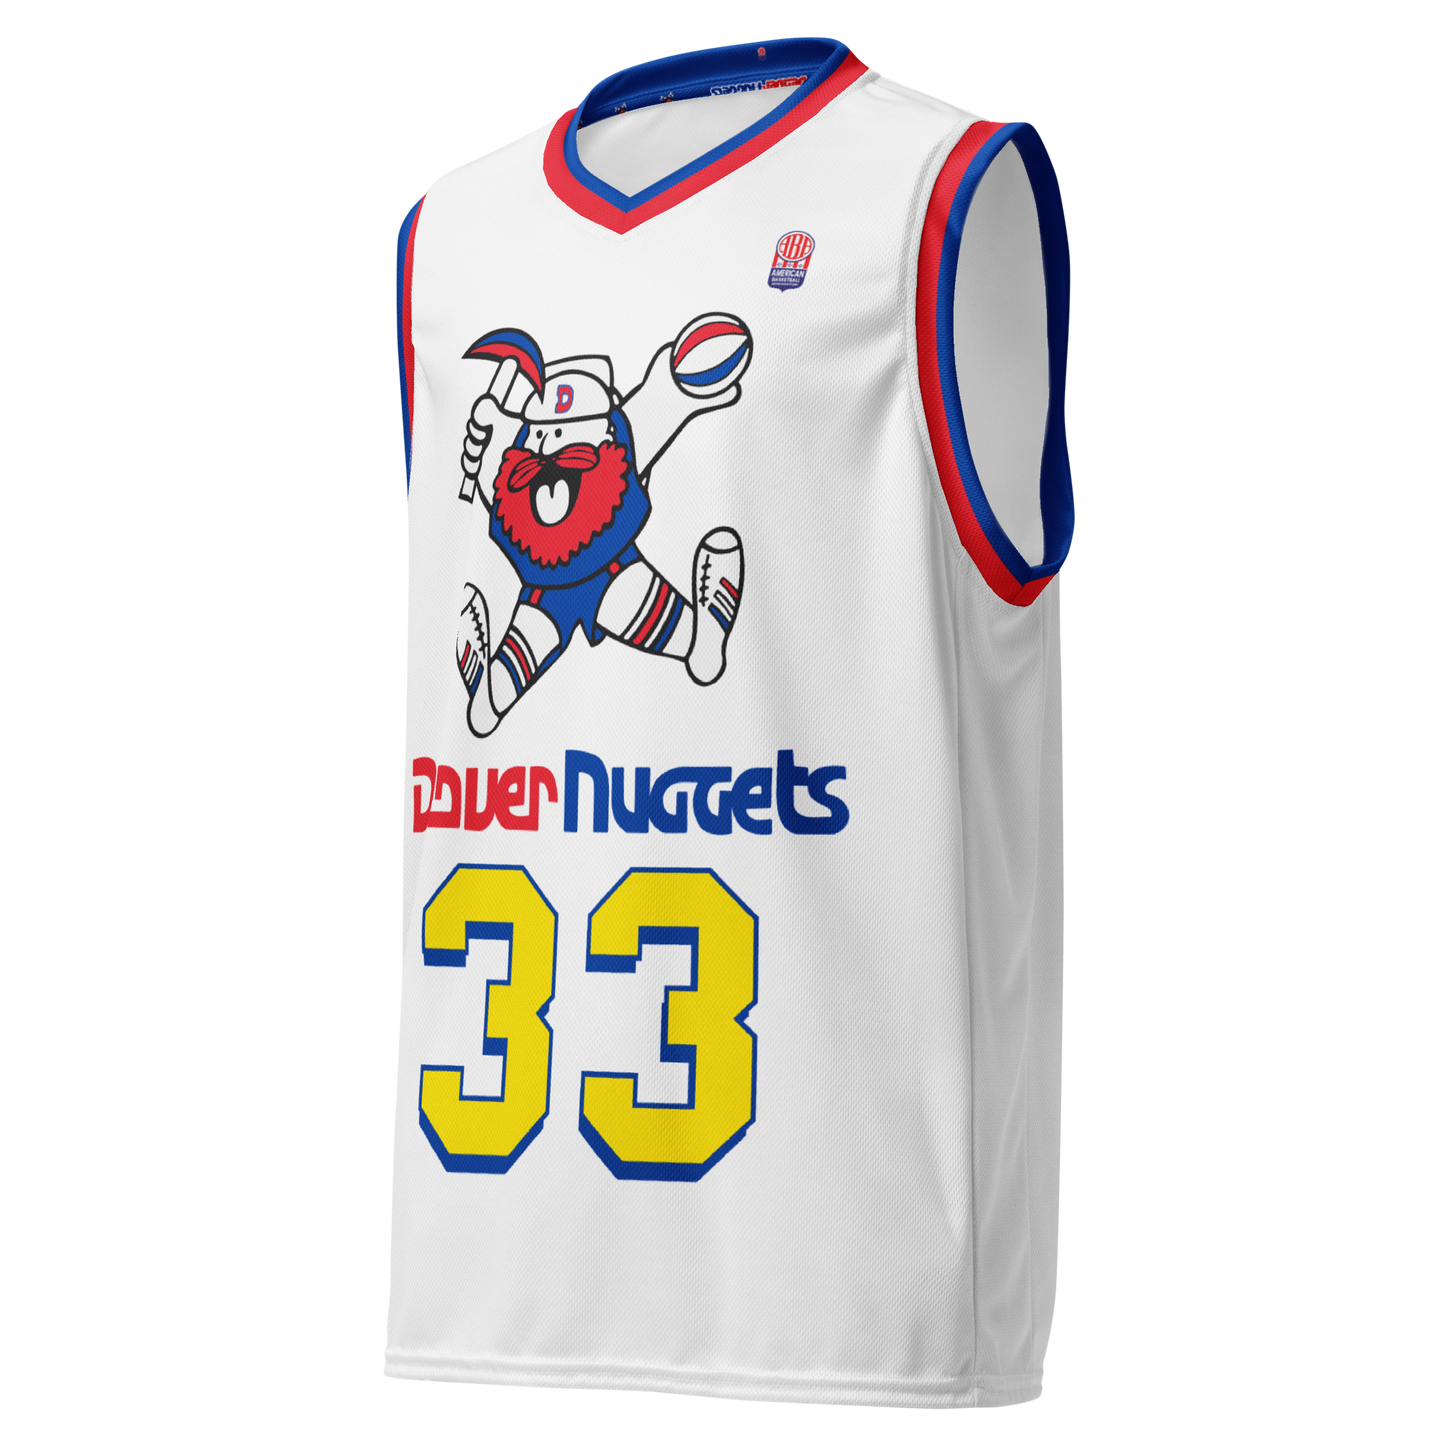 Denver Nuggets NBA Jerseys, Denver Nuggets Basketball Jerseys